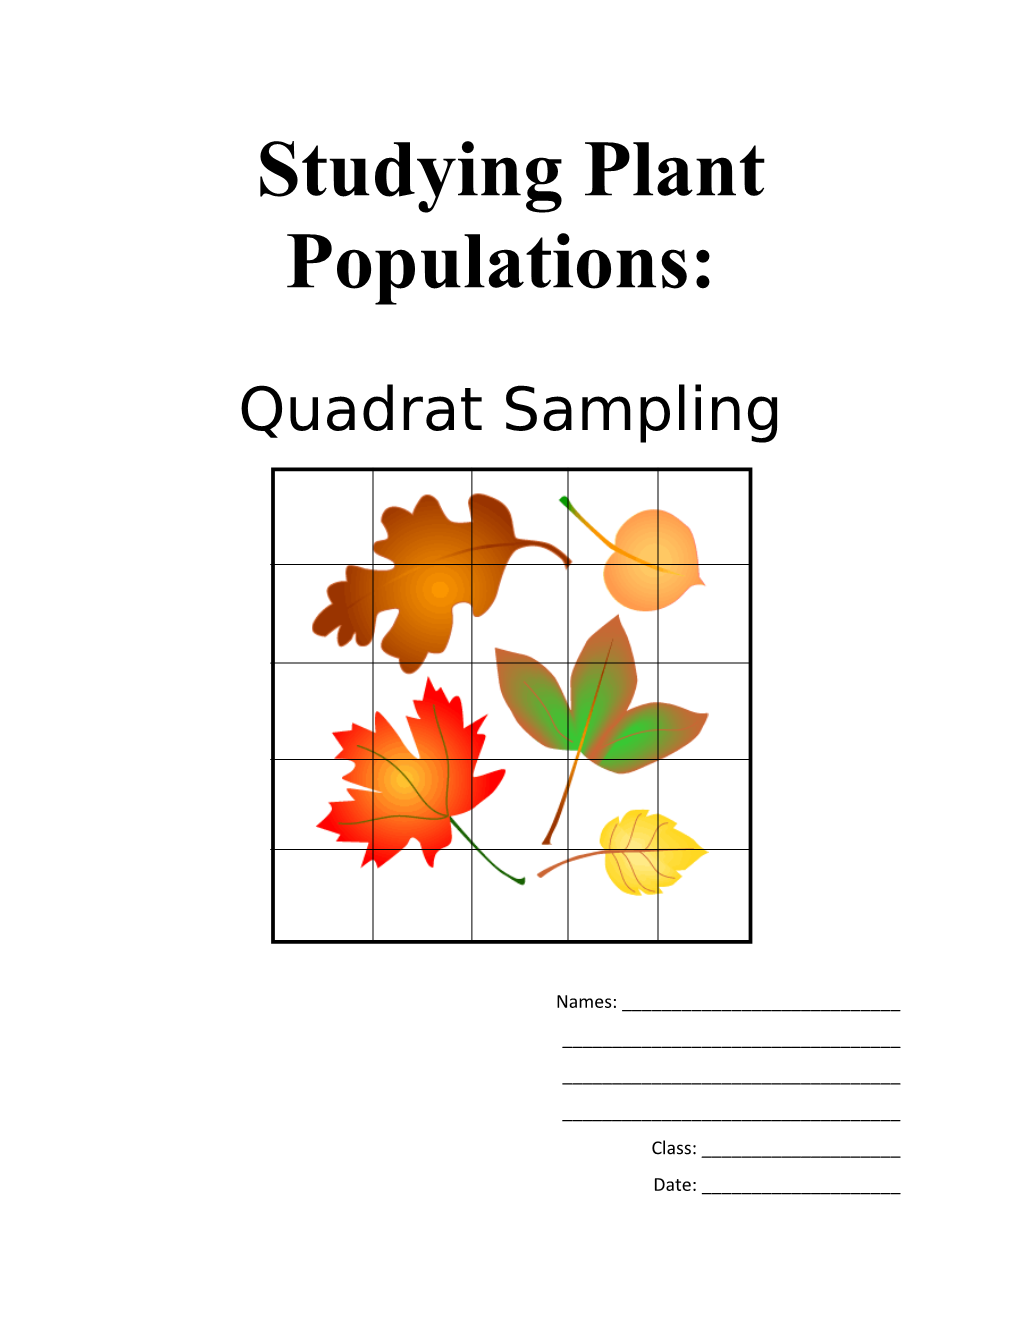 Studying Plant Populations